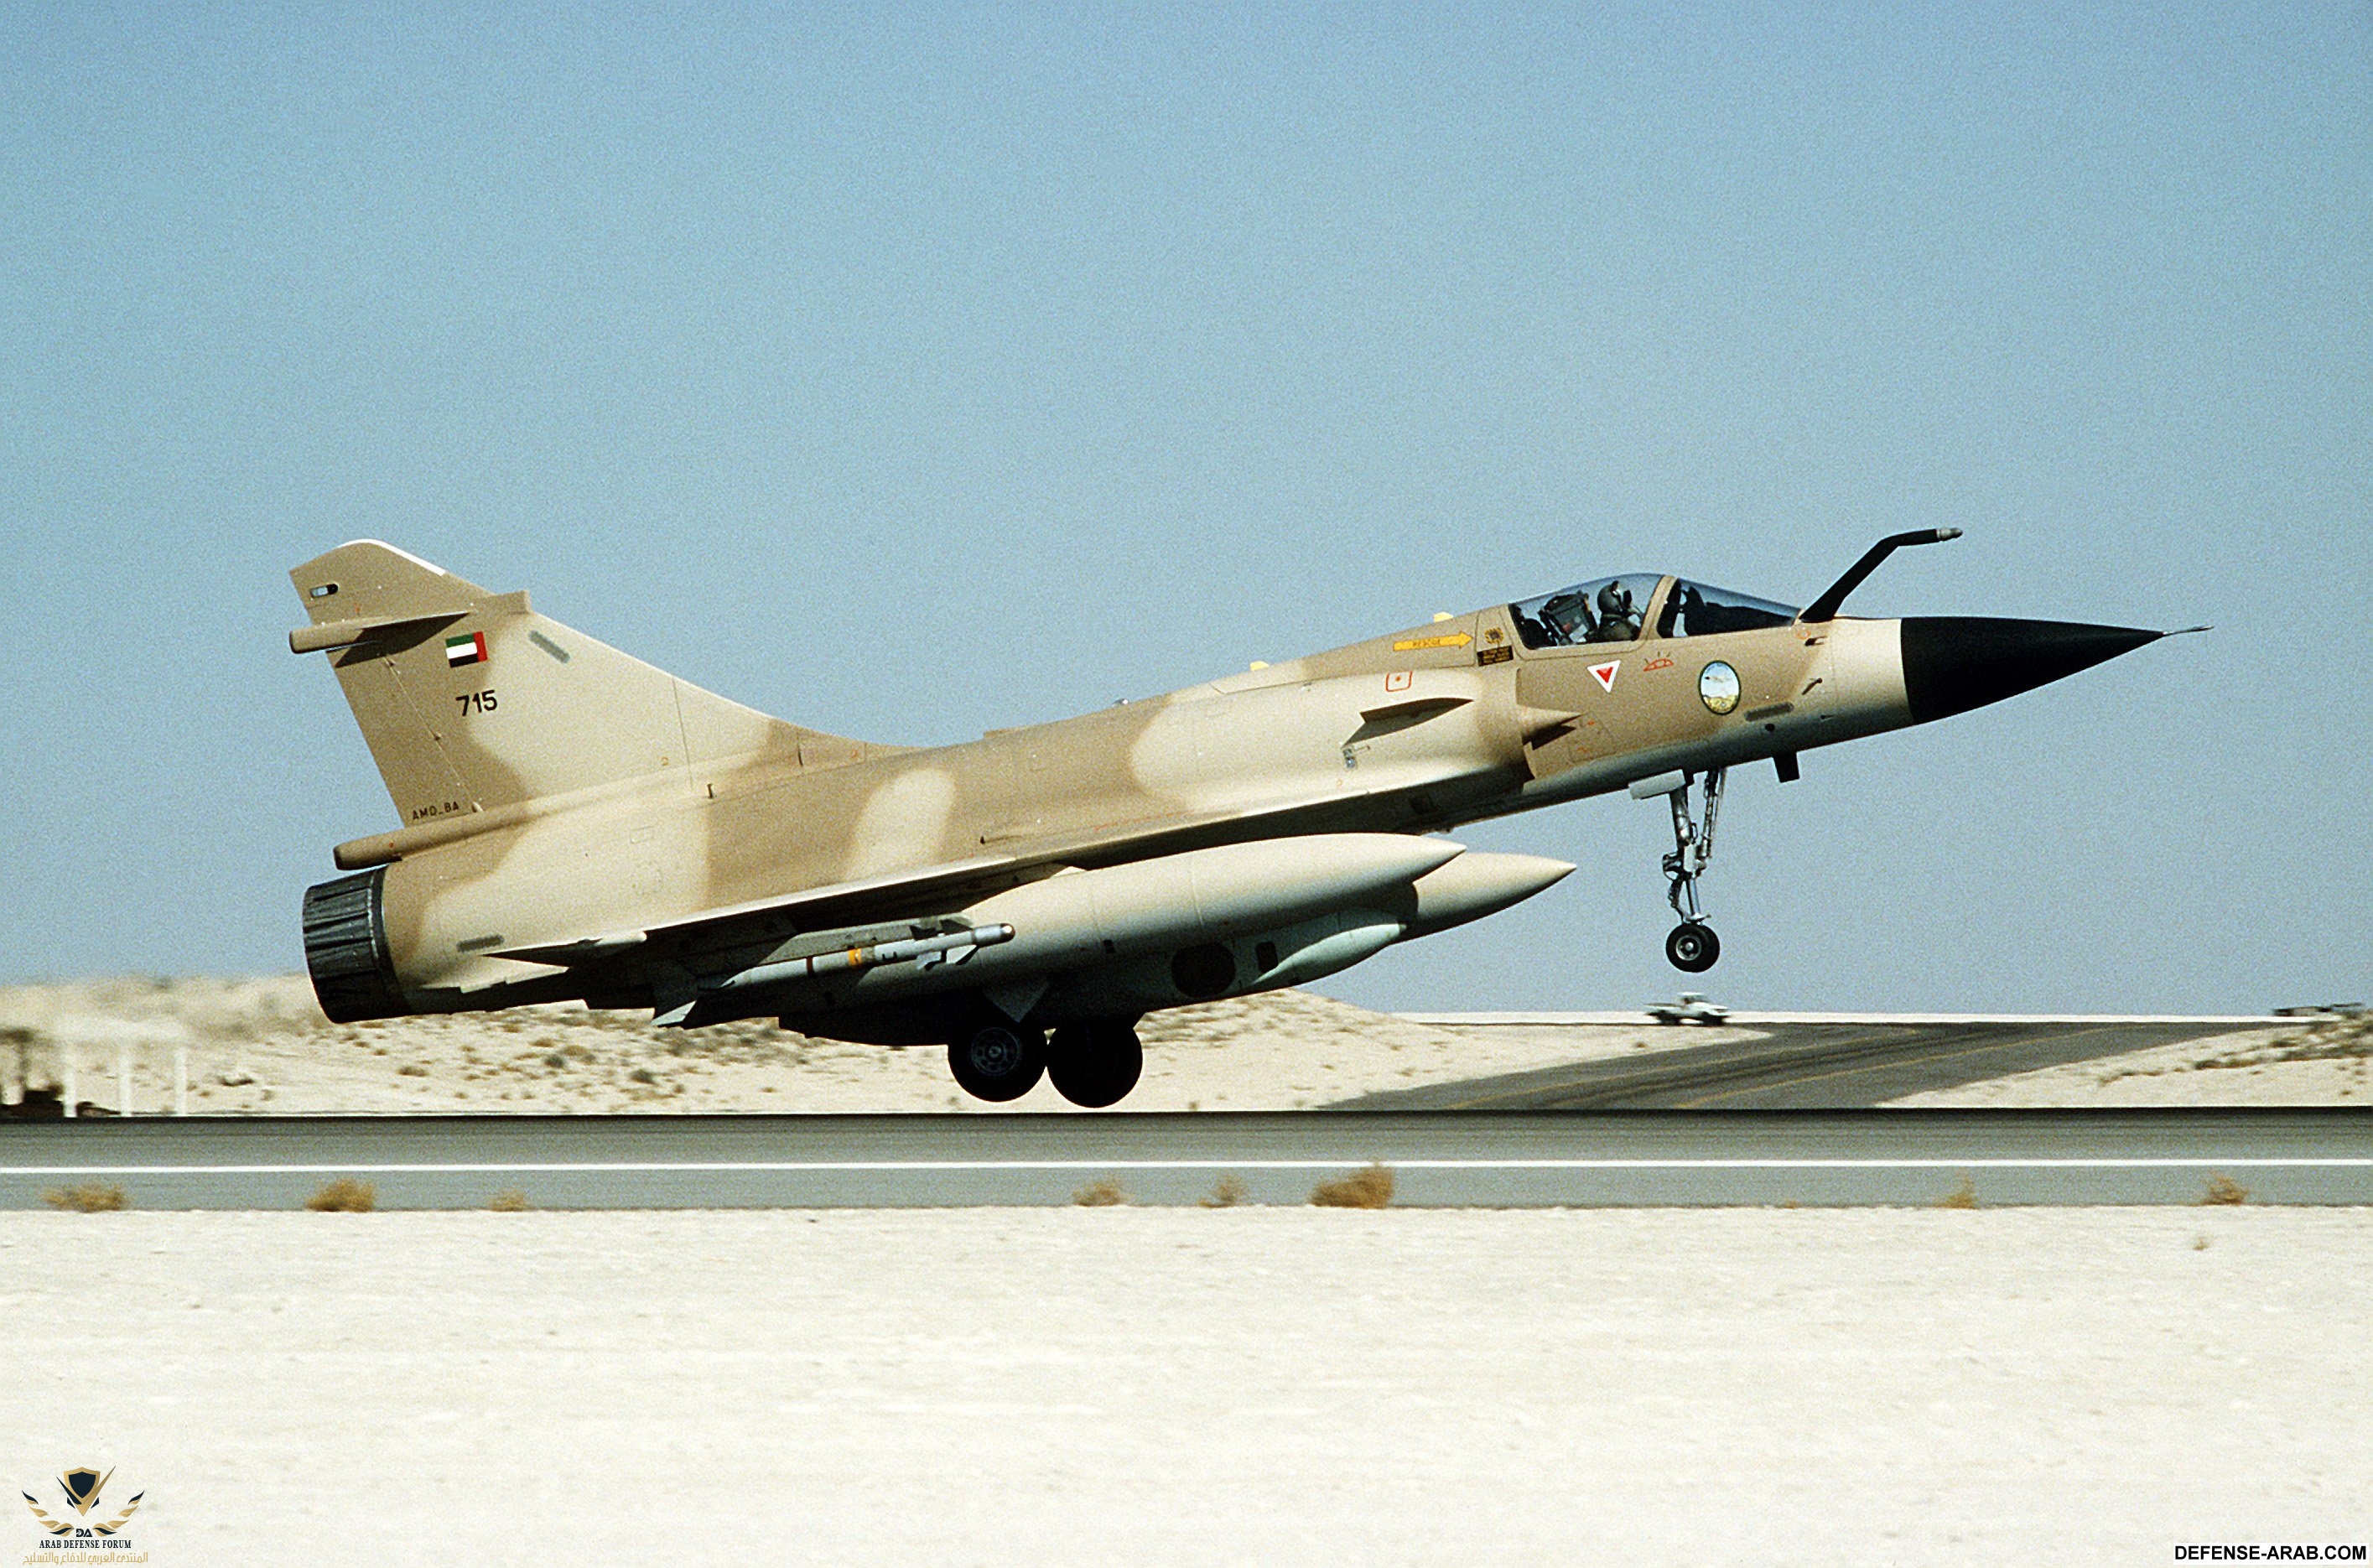 A_Kuwaiti_Mirage_2000C_fighter_aircraft_during_Operation_Desert_Storm.jpg